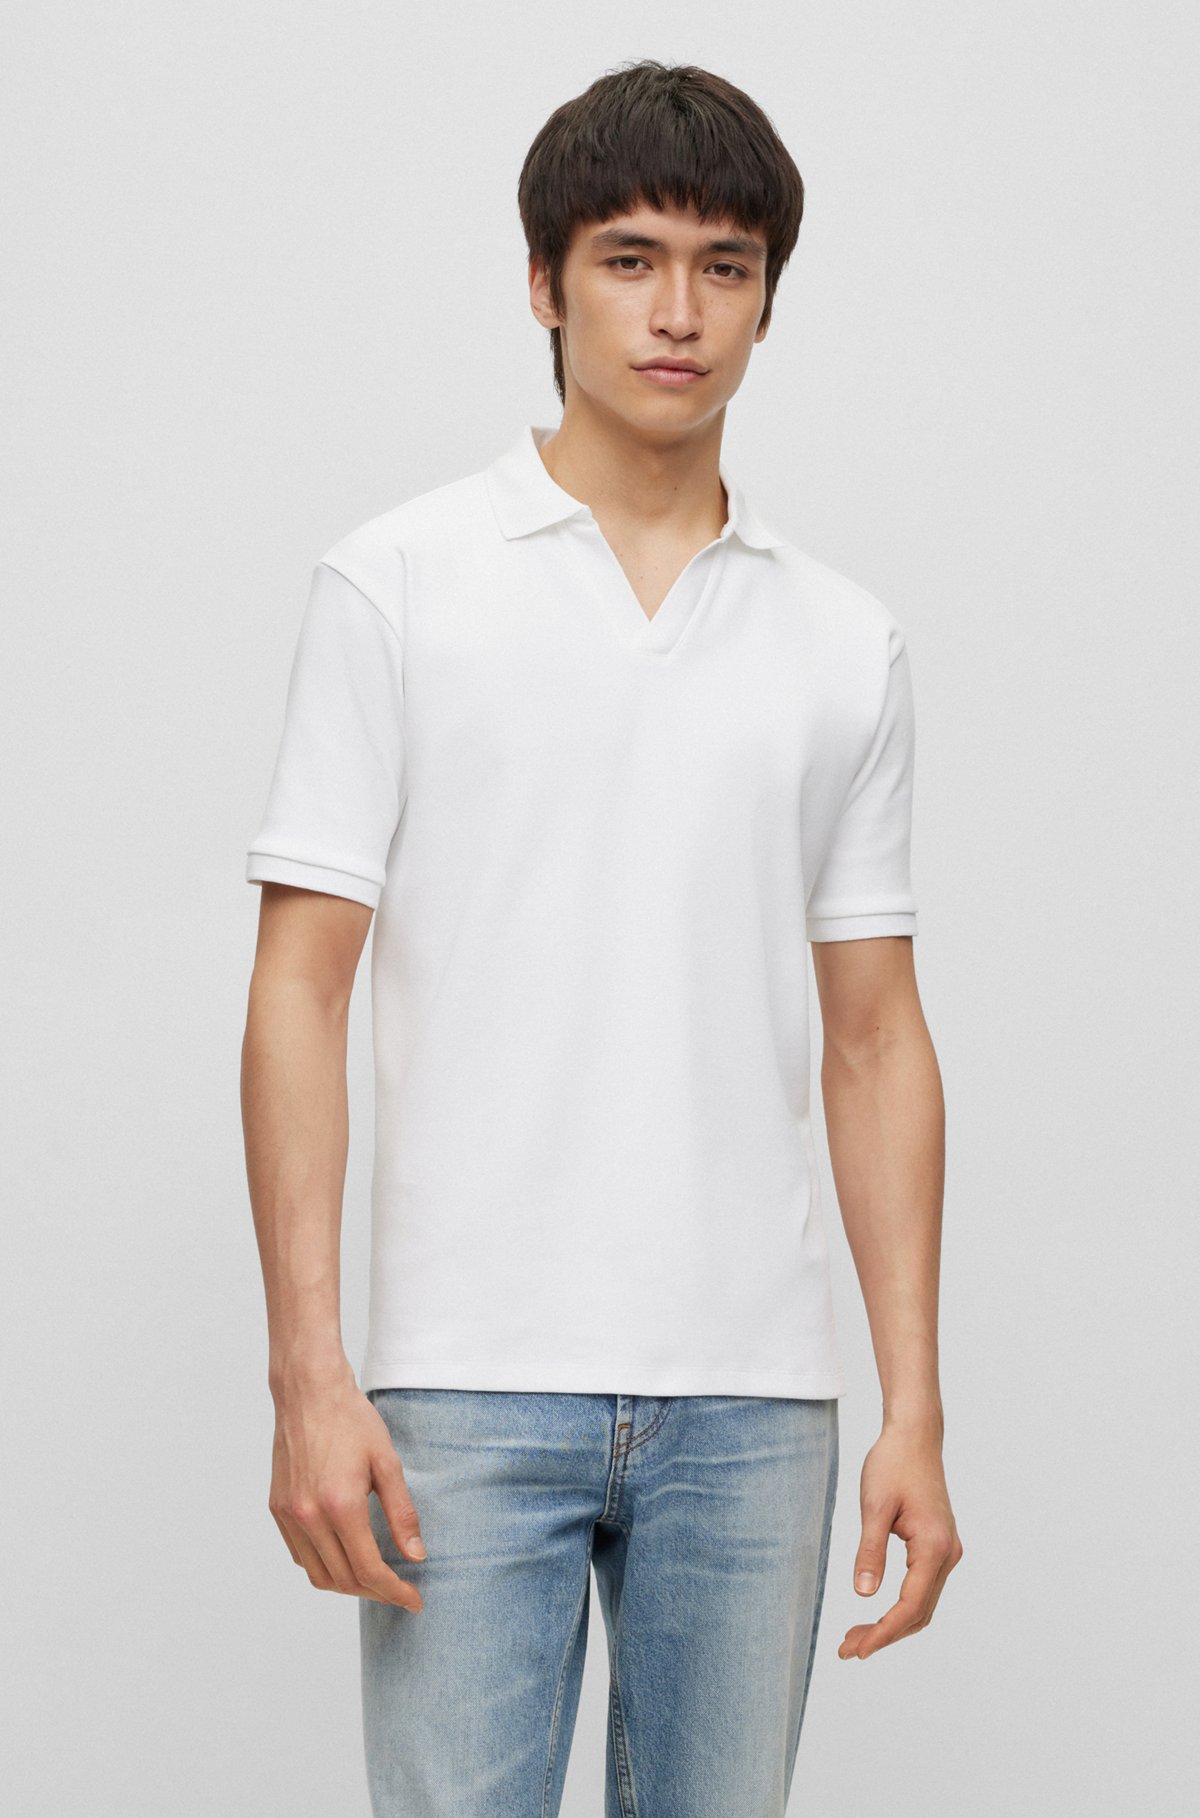 HUGO - Interlock-cotton polo shirt with johnny collar